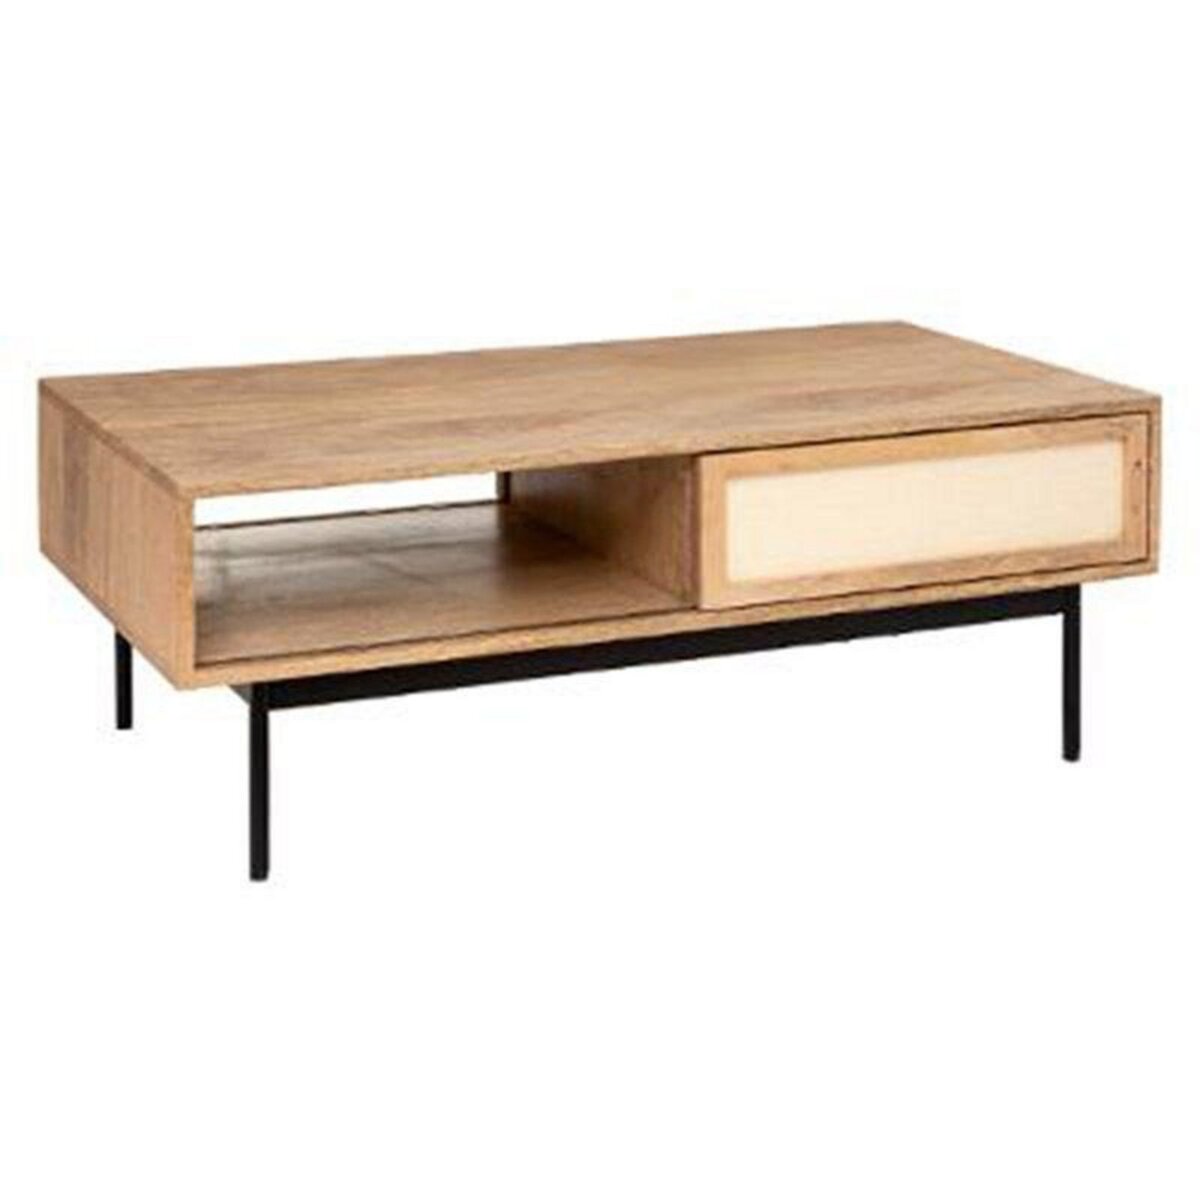  Table Basse 2 Portes Design  Zen  110cm Beige